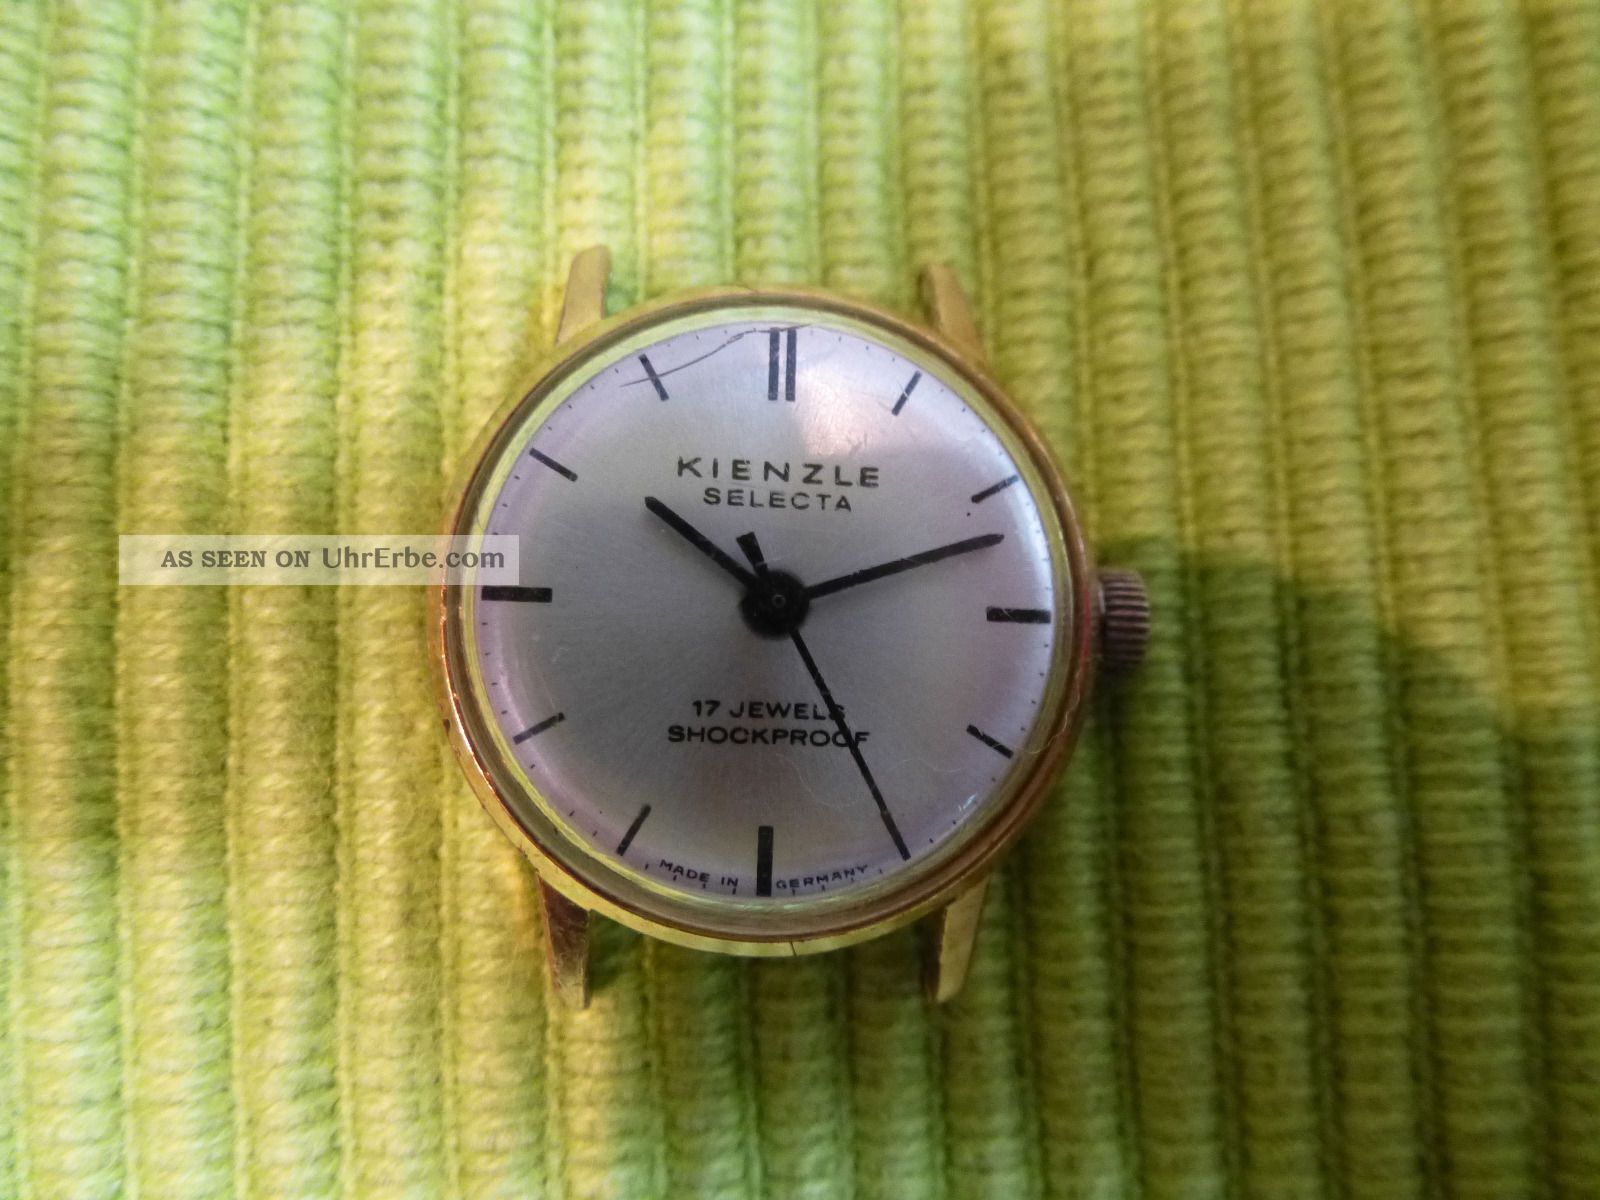 Kienzle Selecta 17jewels,  Shockproof Armbanduhr,  Handaufzug - Funktionstüchtig Armbanduhren Bild